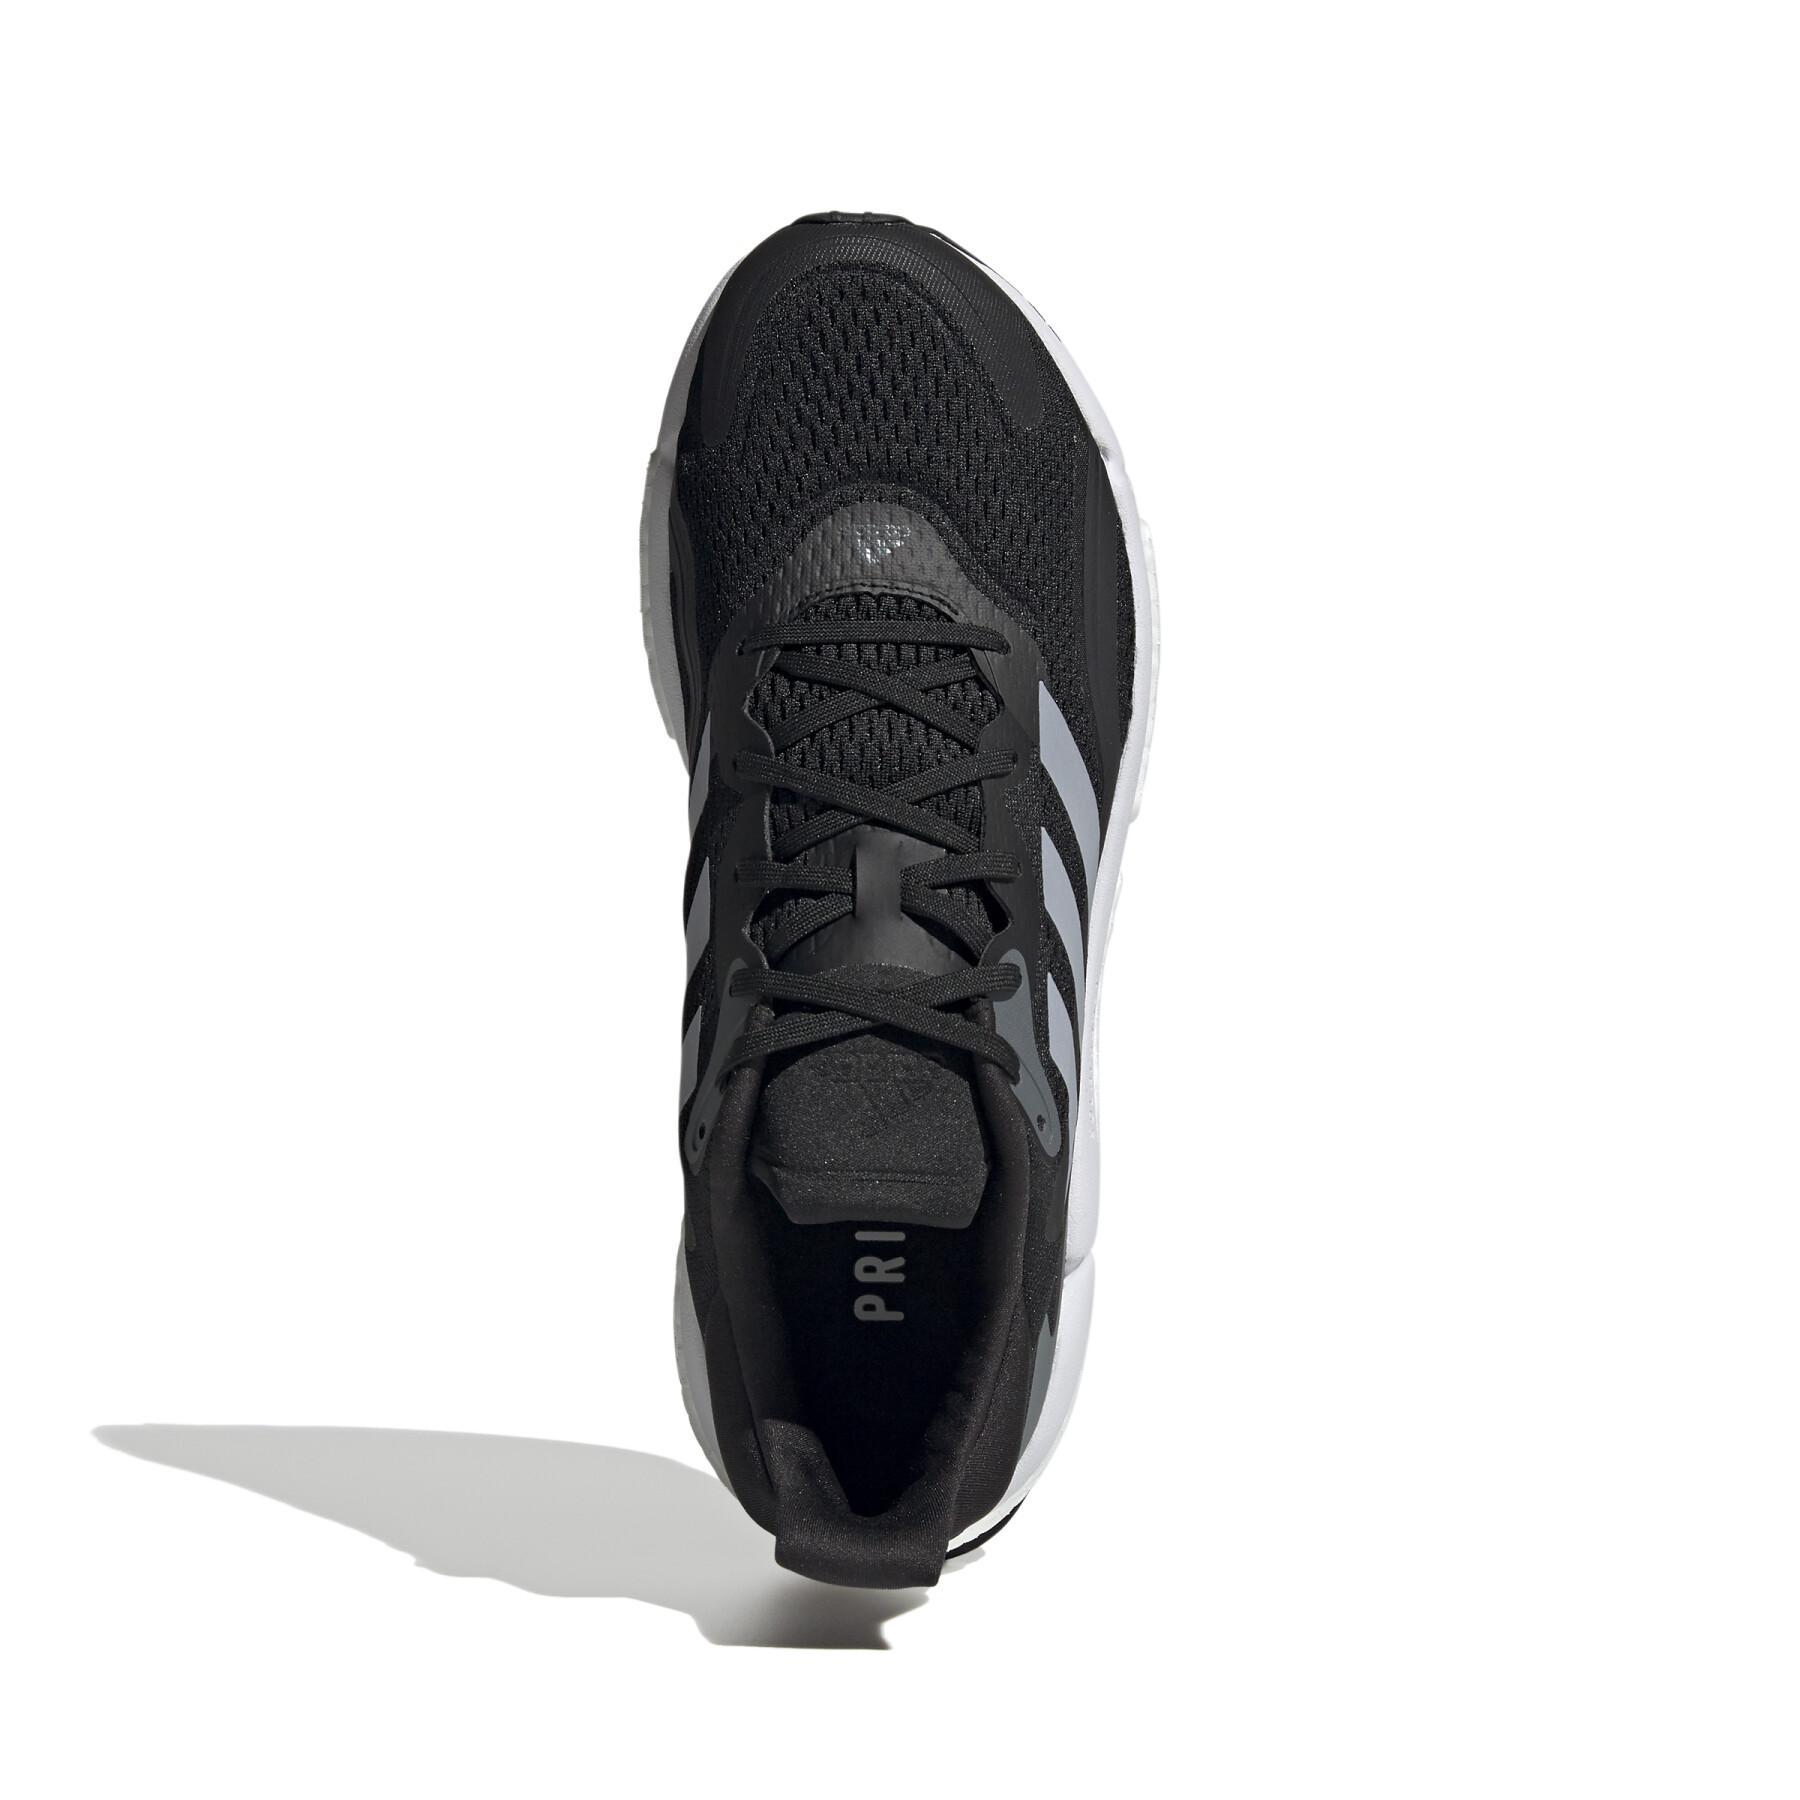 Schoenen Adidas solar boost 3M